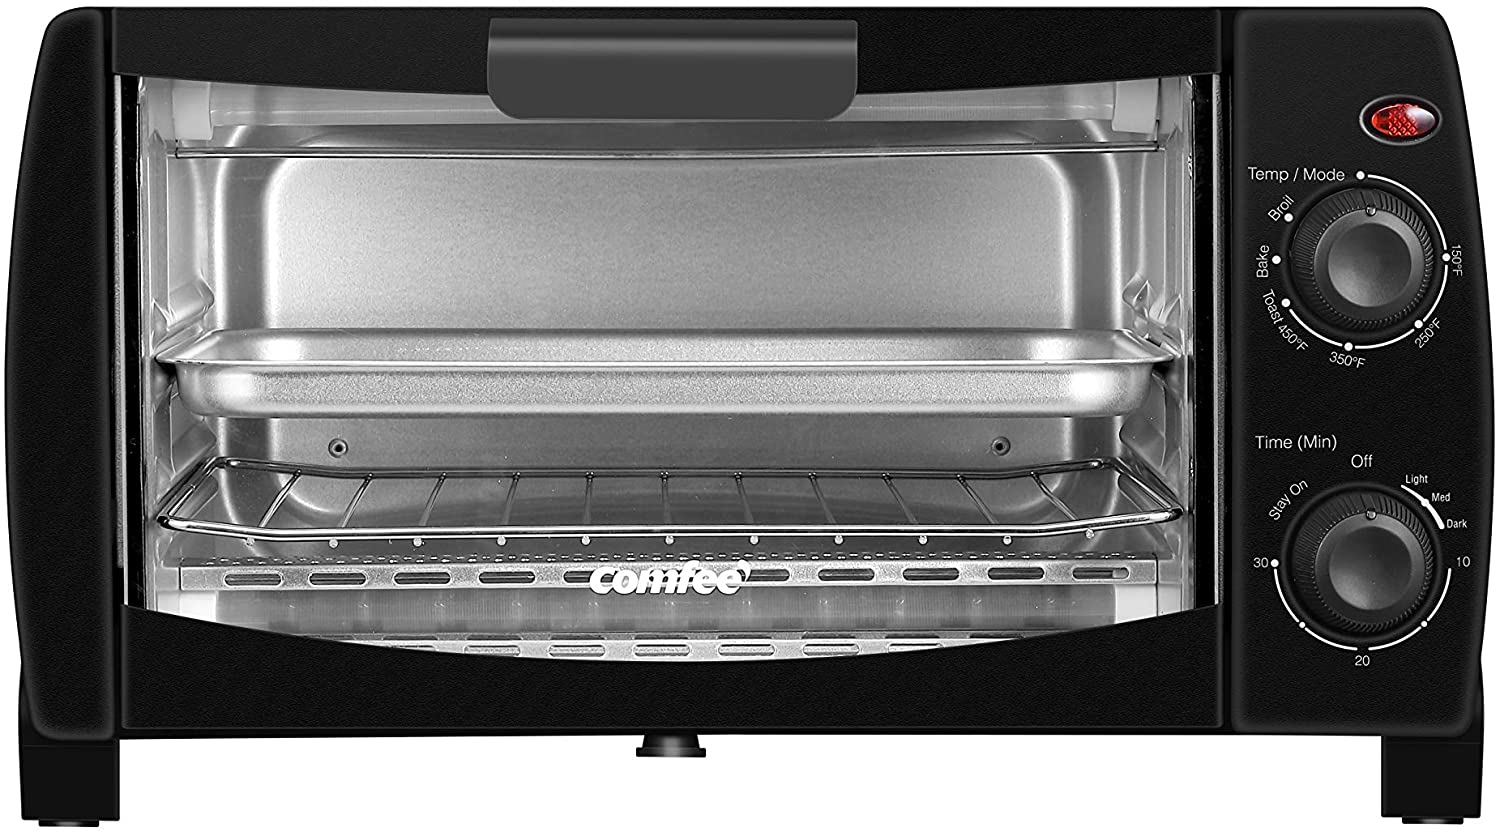 4. Comfee' Toaster Oven